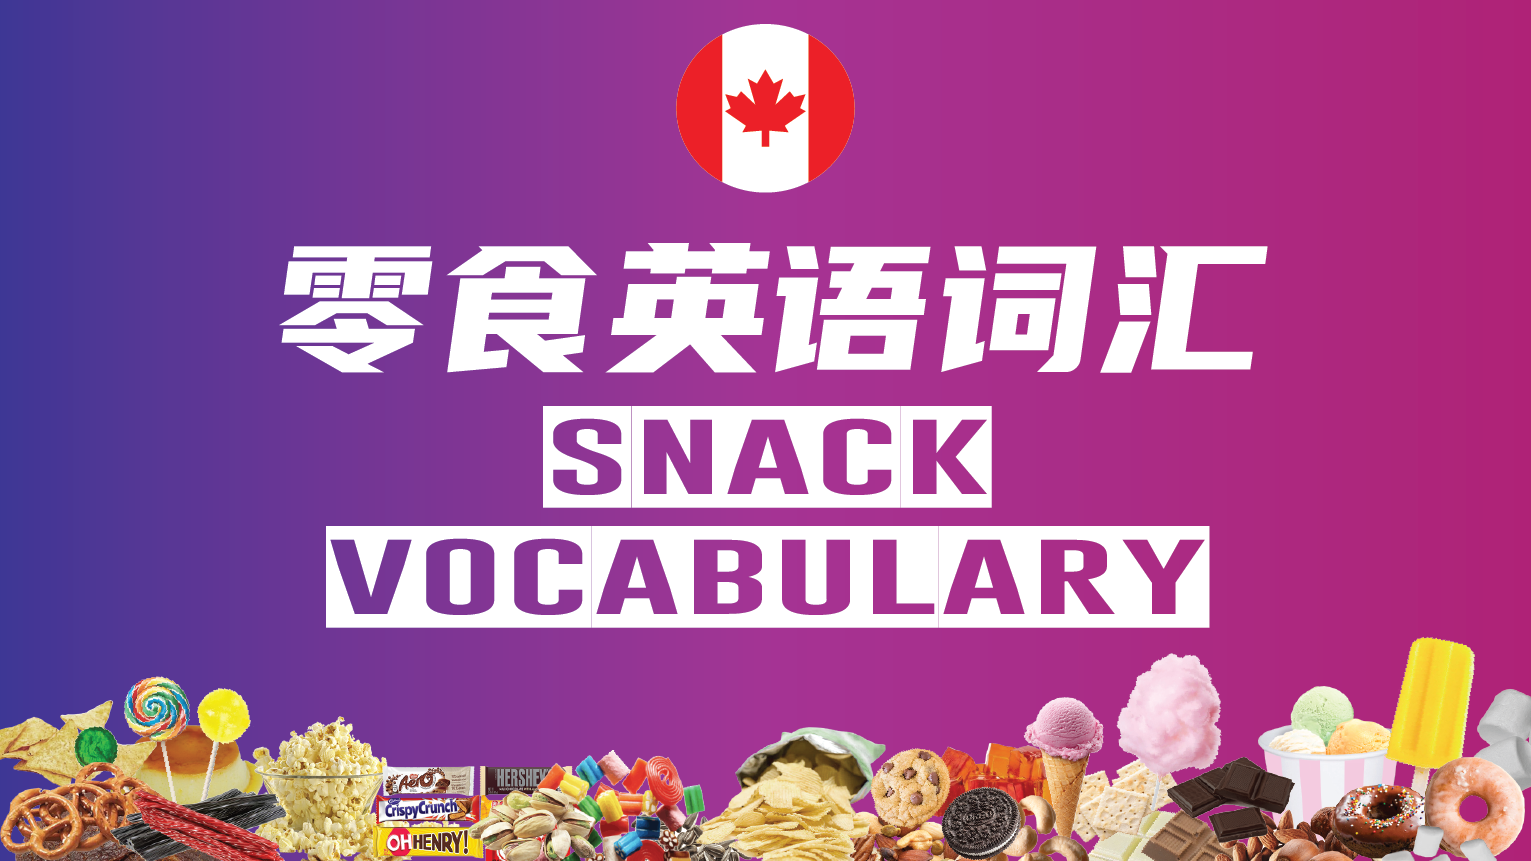 Snack Vocabulary